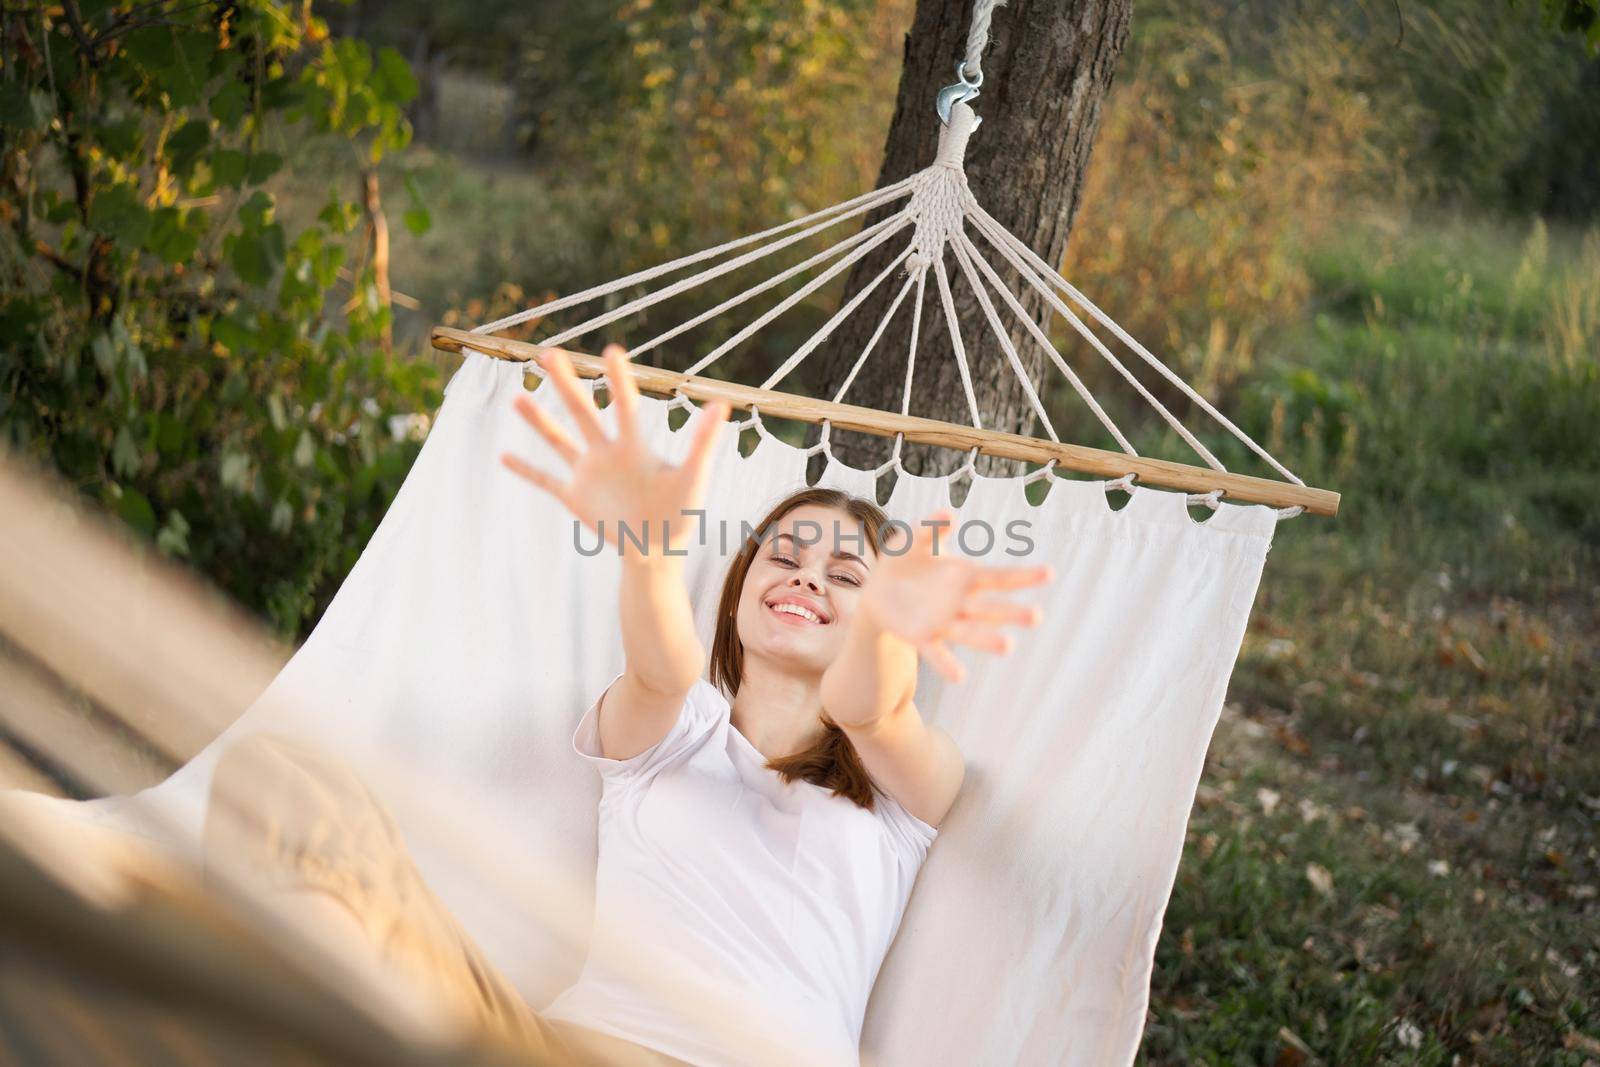 woman relaxing in nature in a hammock garden fresh air by Vichizh